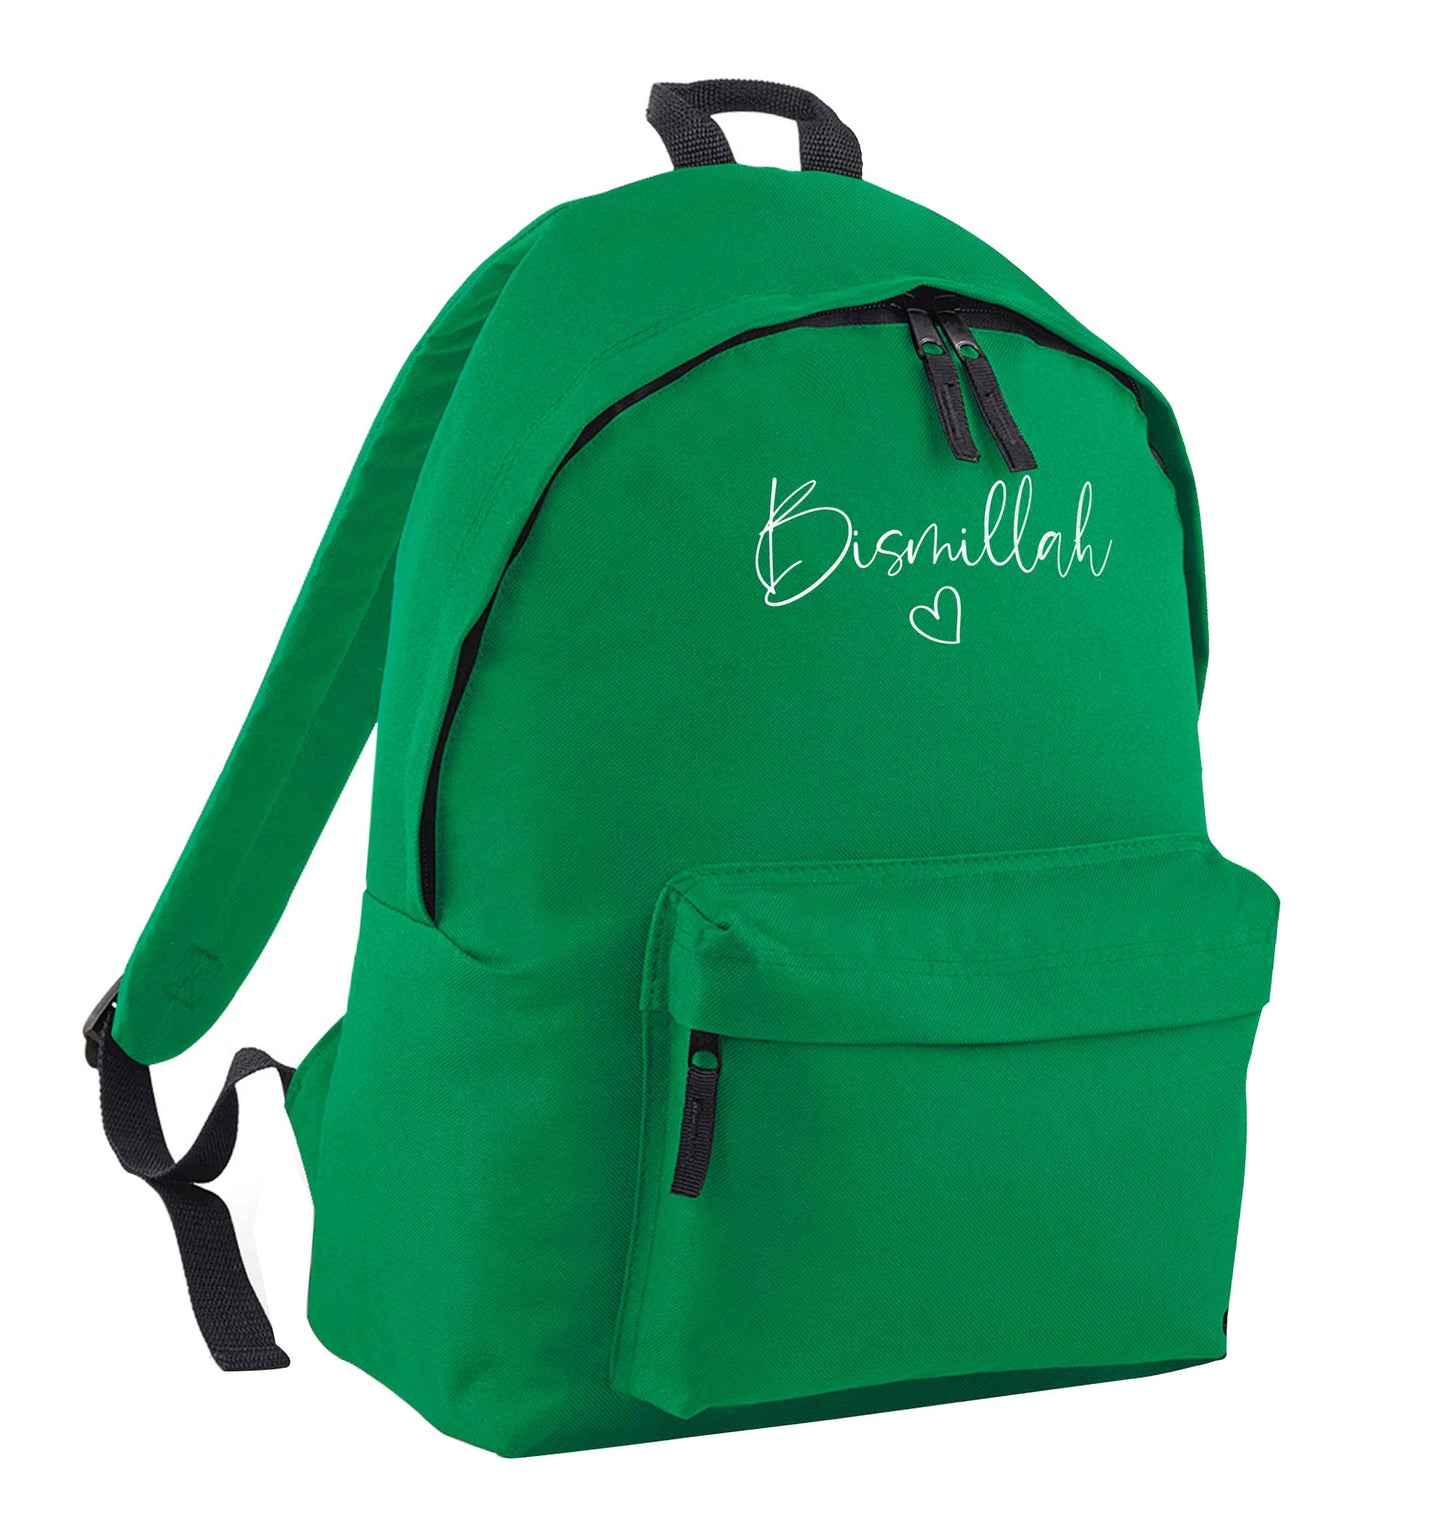 Bismillah green adults backpack